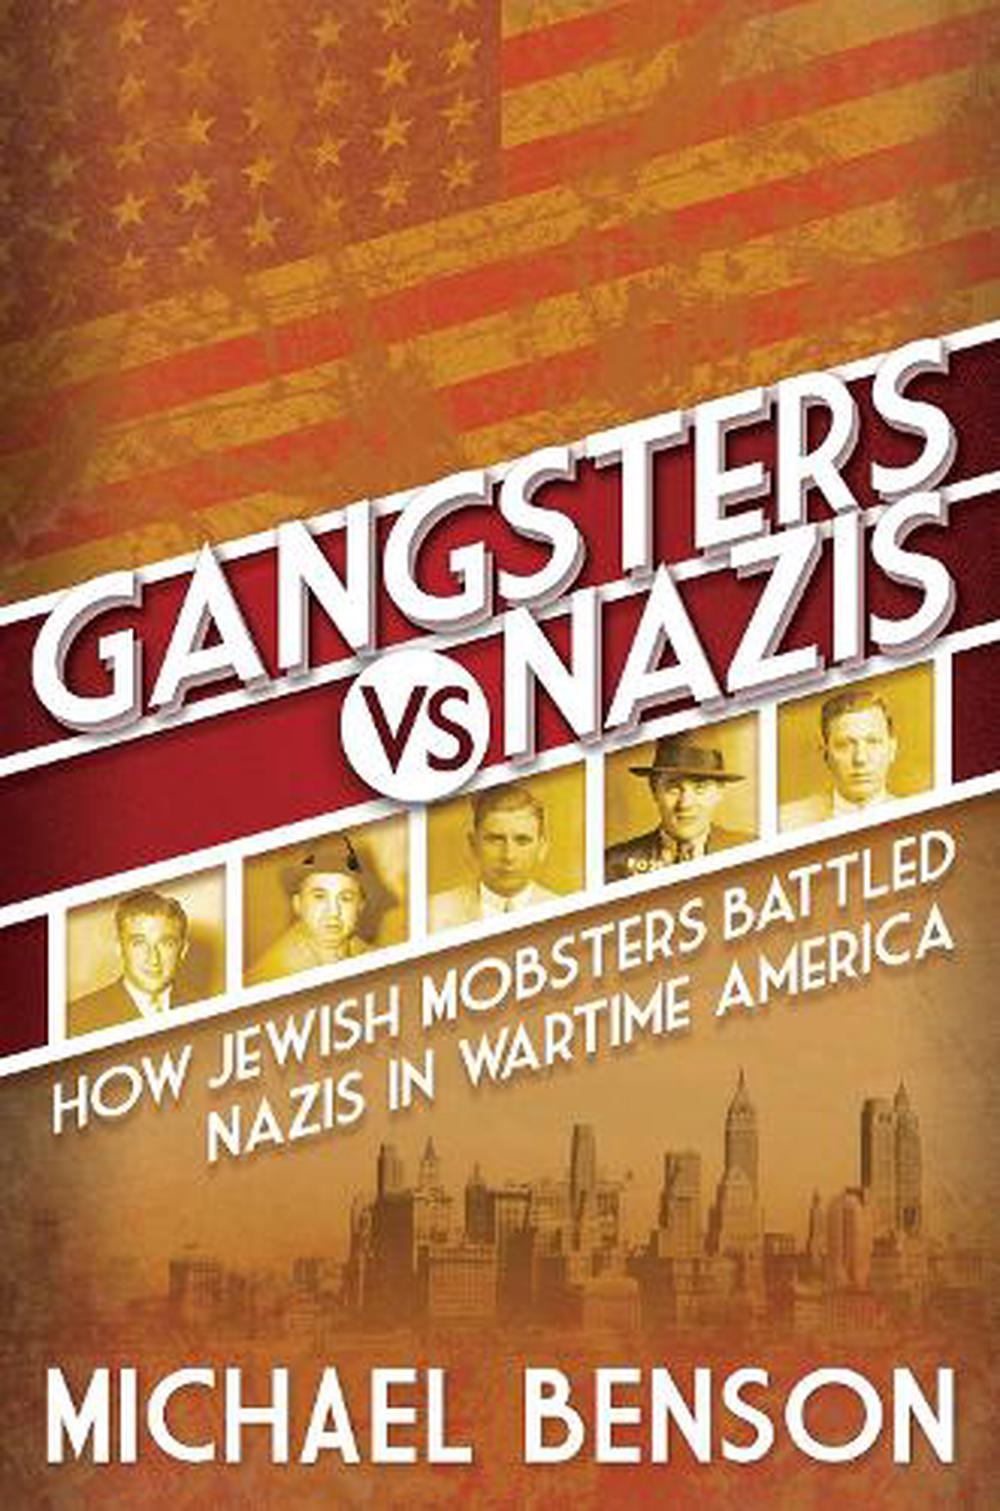 Gangsters vs. Nazis by Michael Benson, Hardcover, 9780806541792 | Buy ...